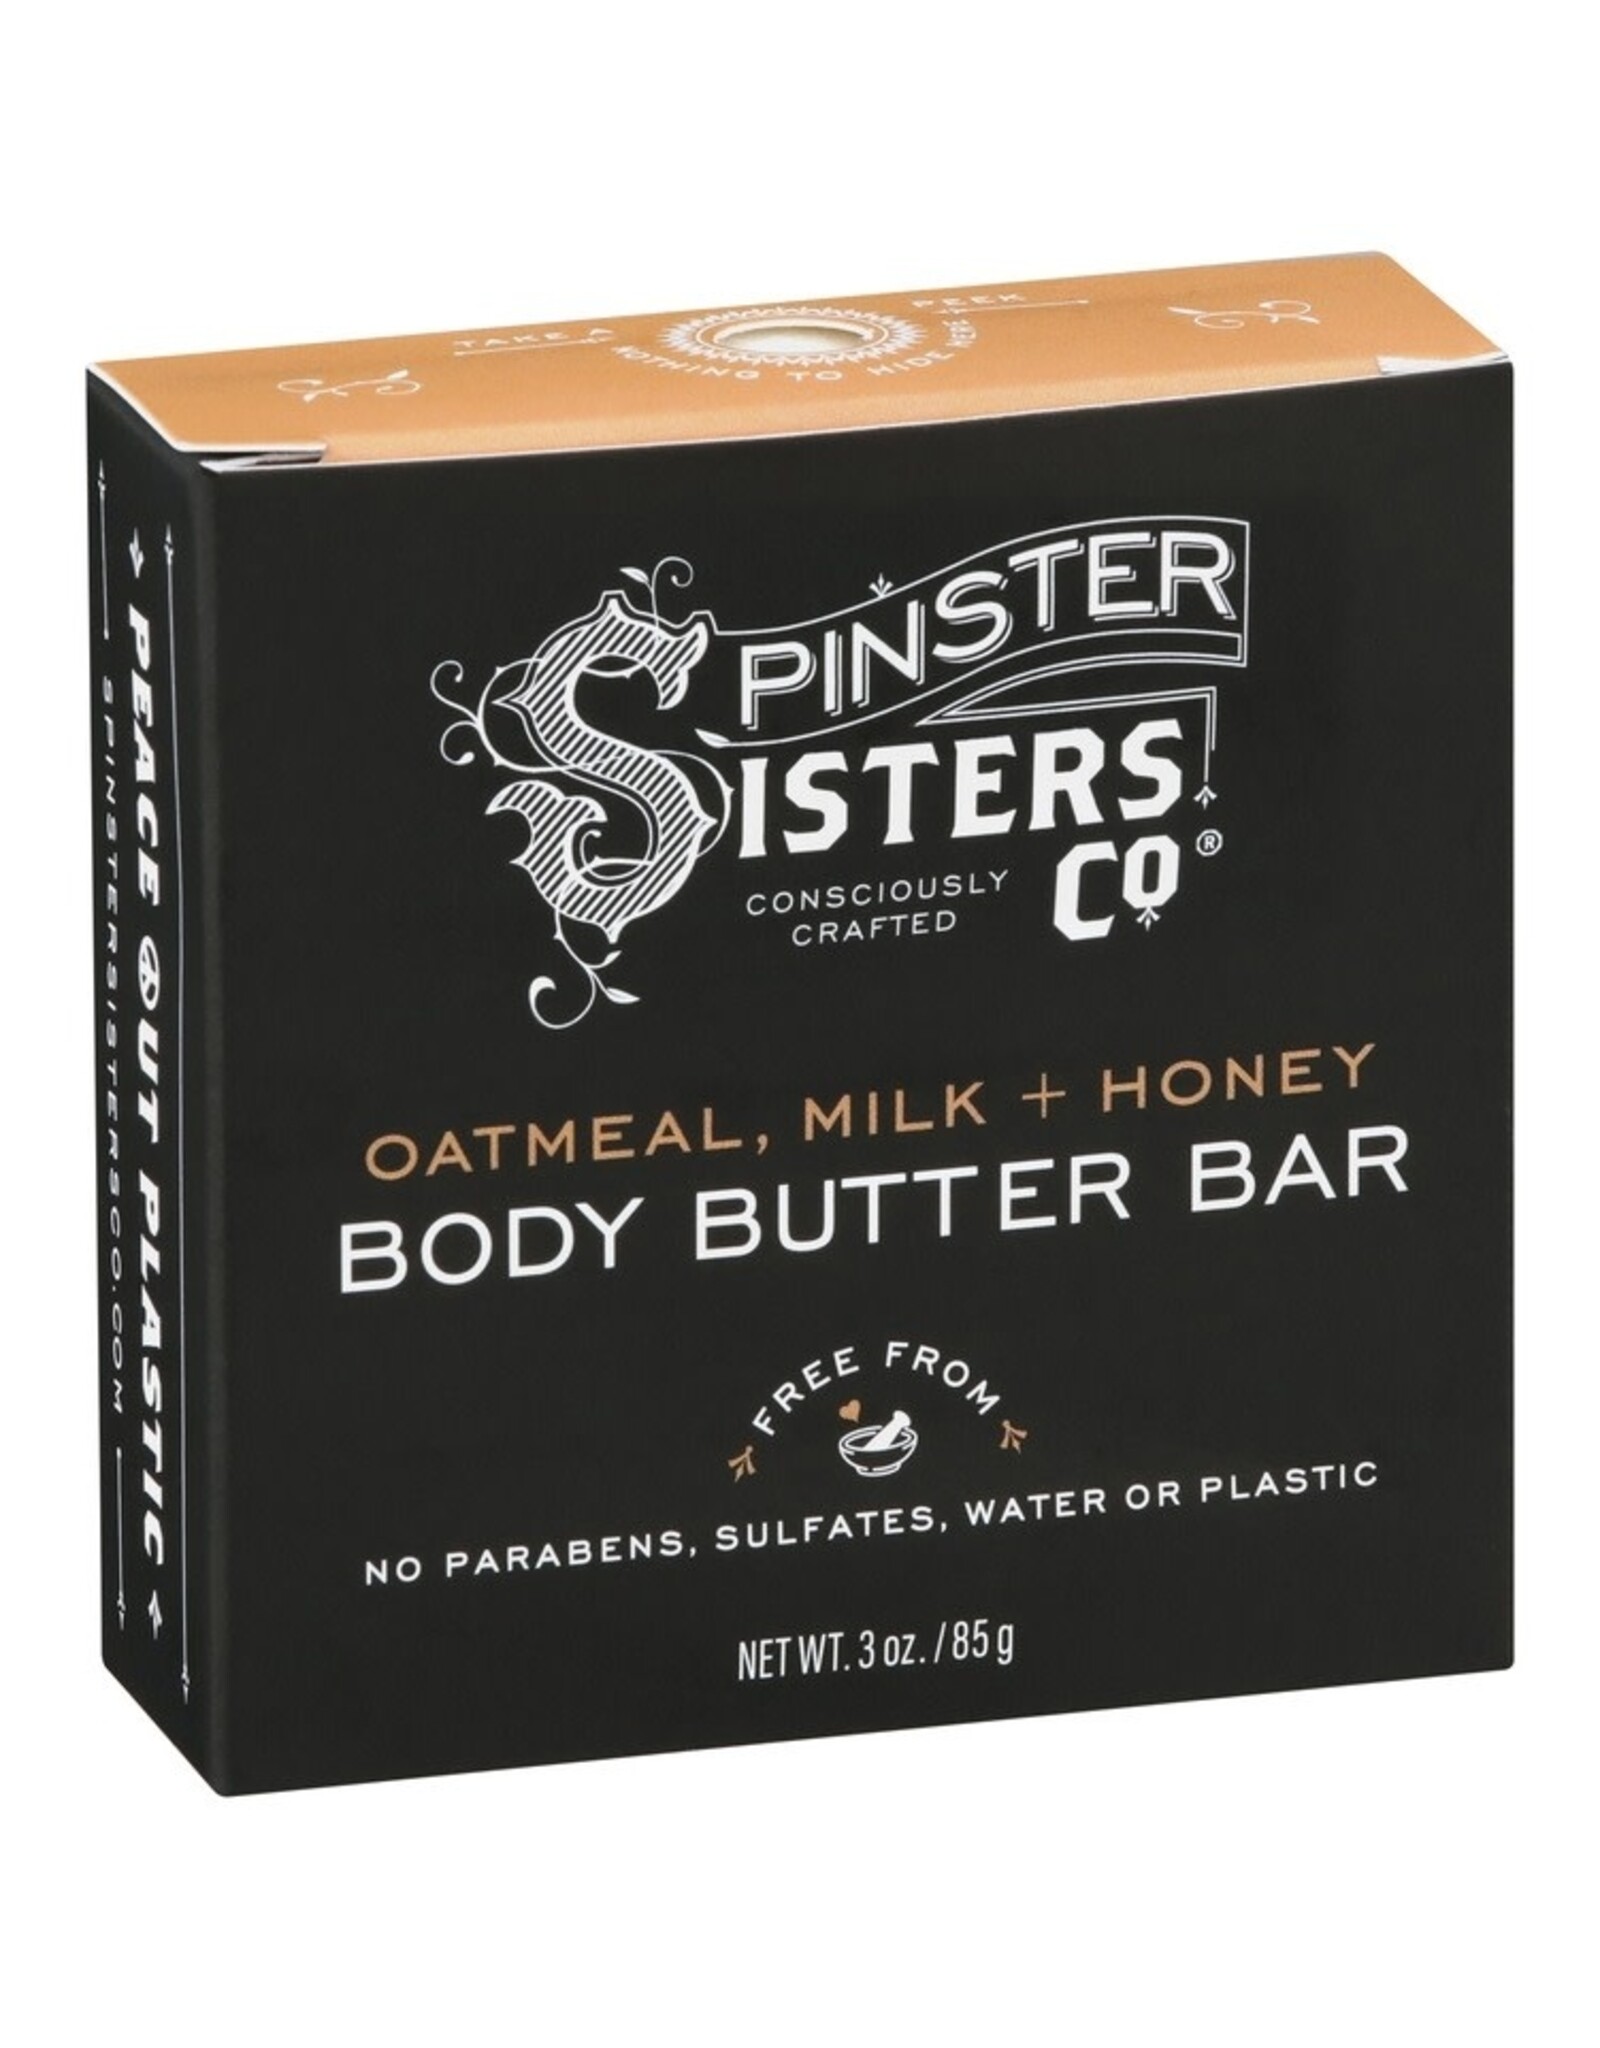 Spinster Sisters Oatmeal, Milk & Honey Body Butter Bar